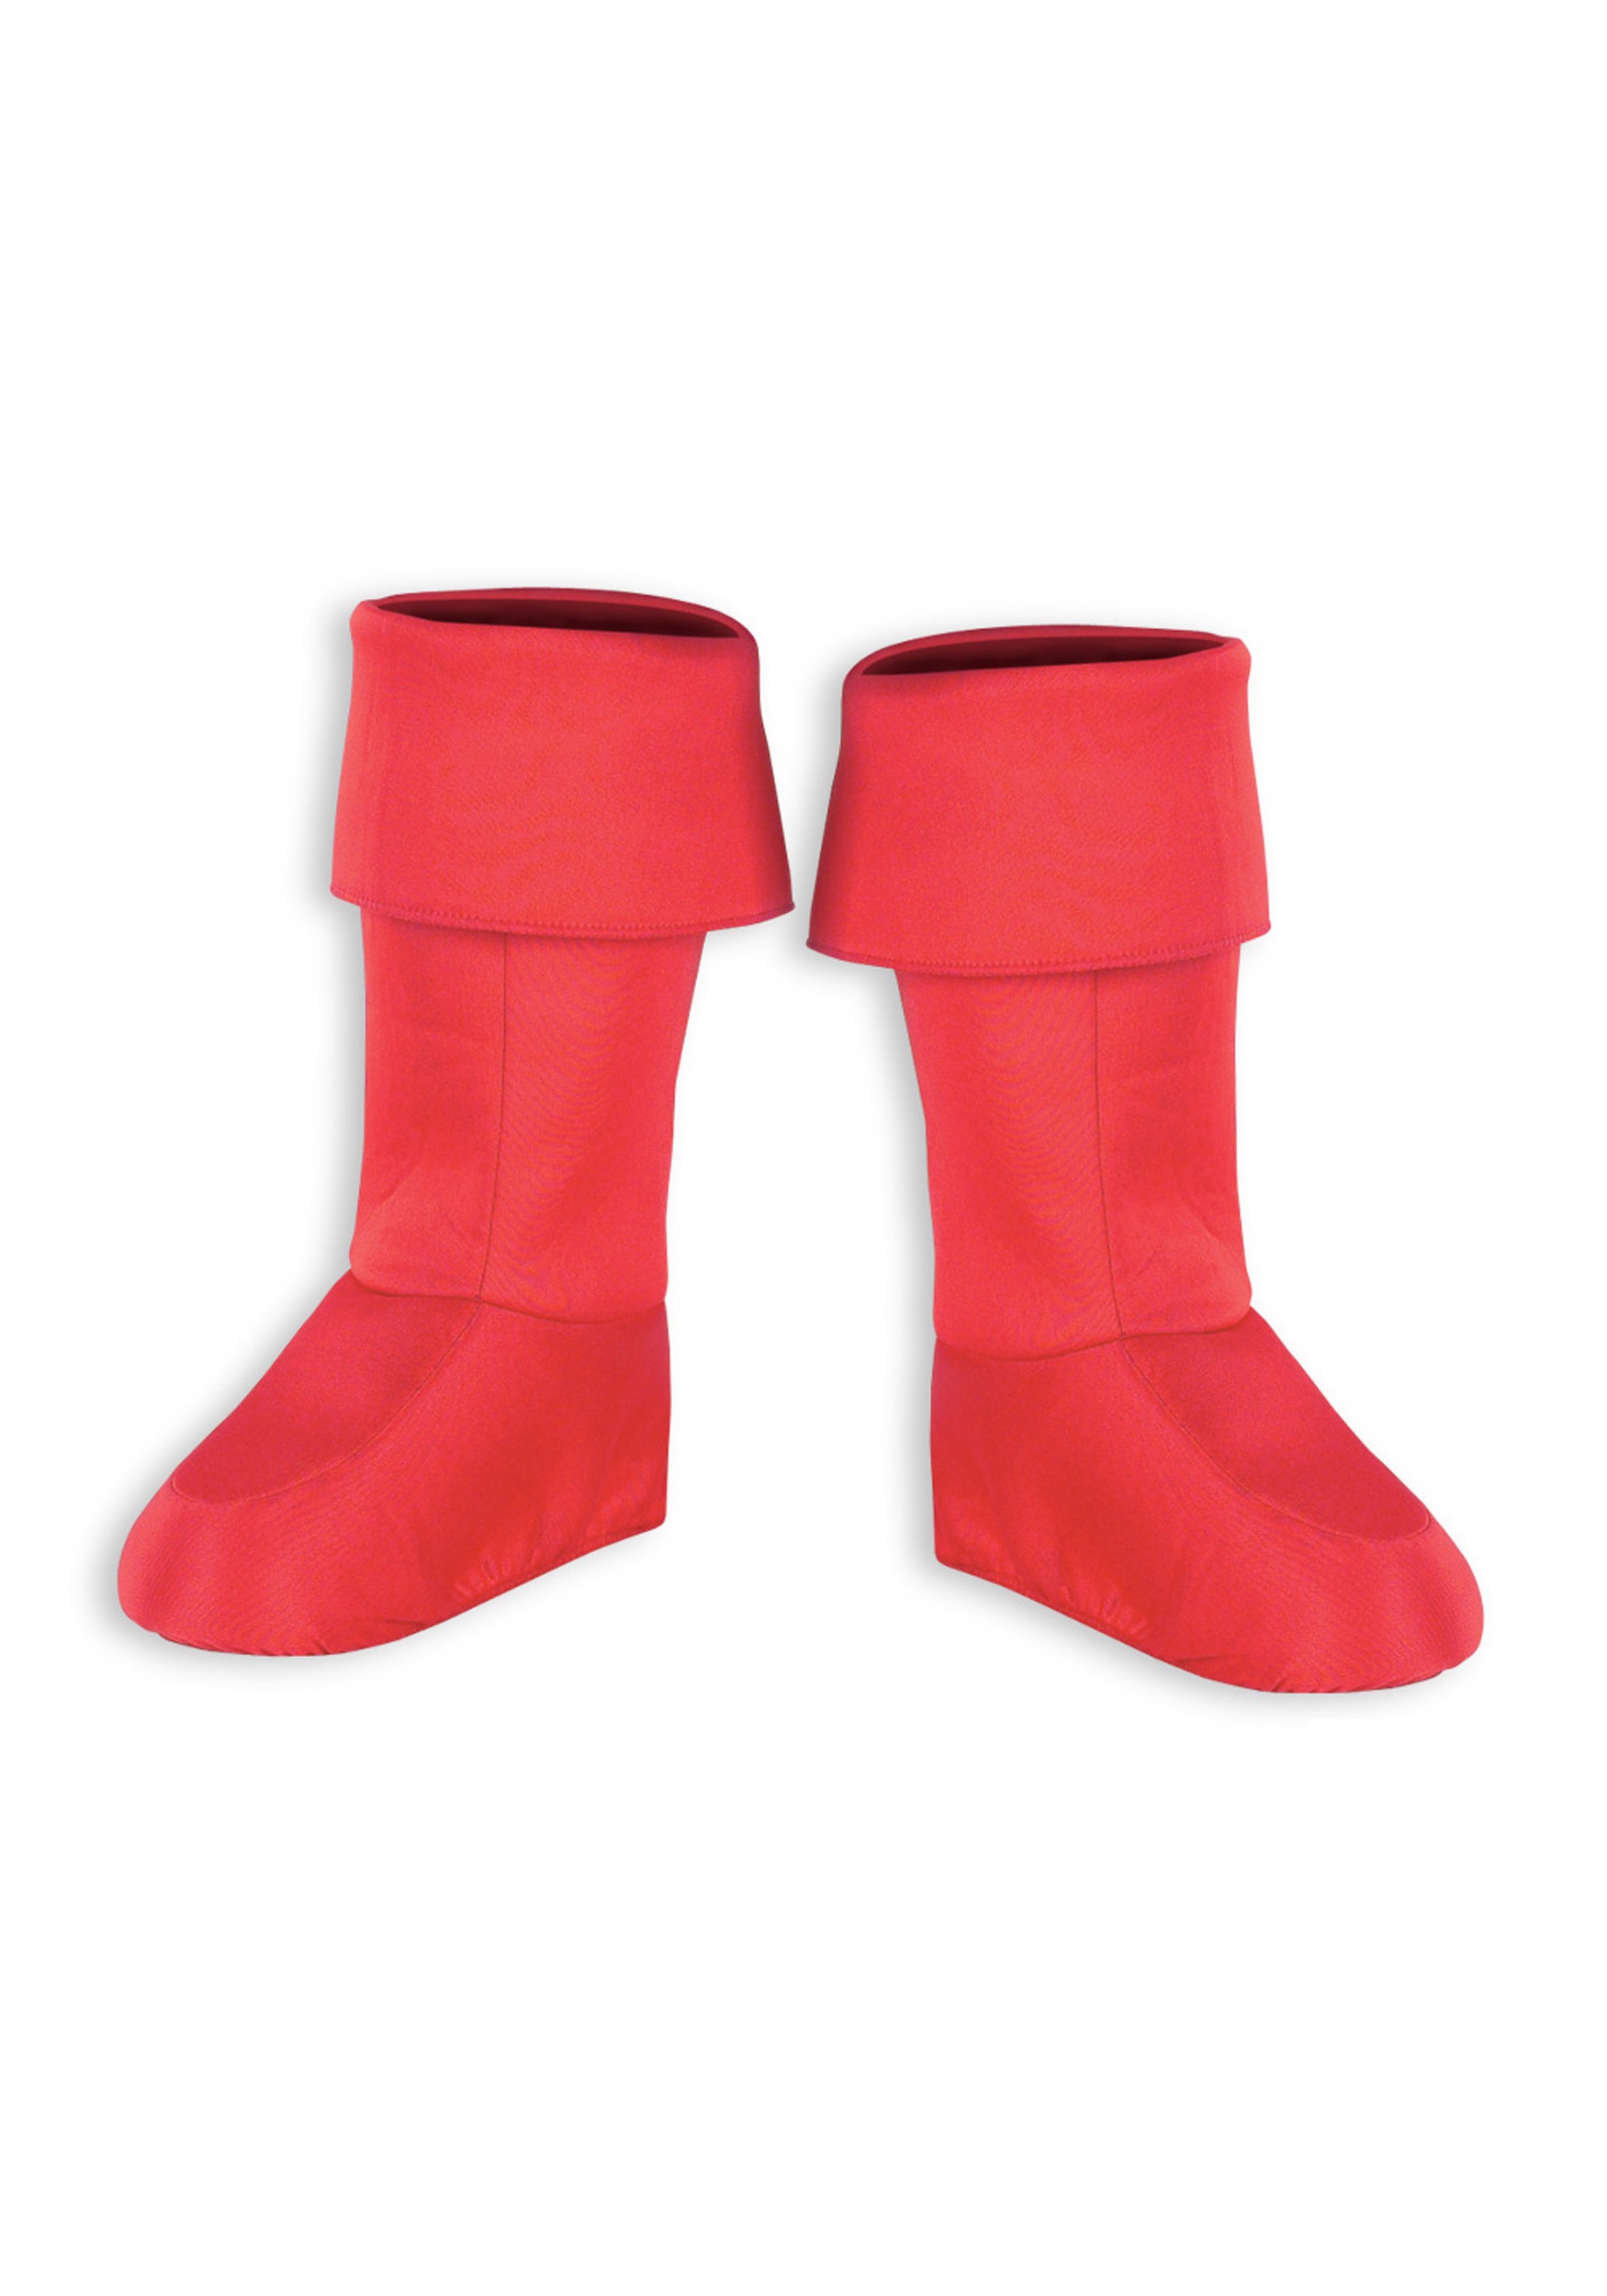 red superhero boots